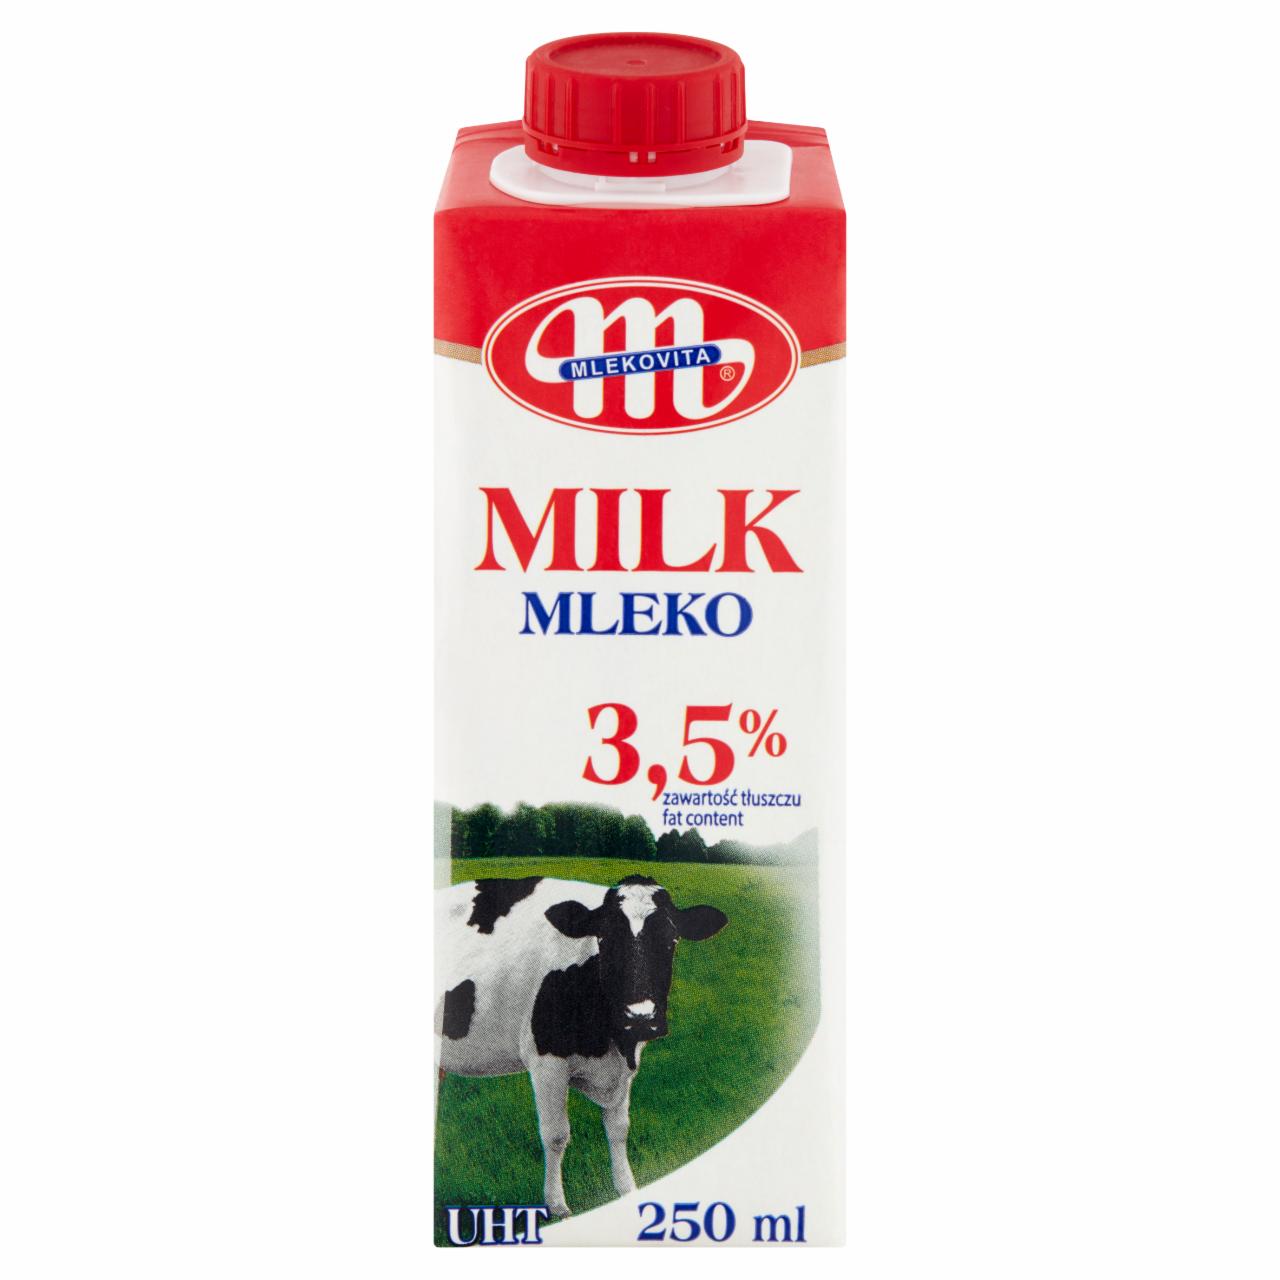 Zdjęcia - Mlekovita Mleko UHT 3,5% 250 ml